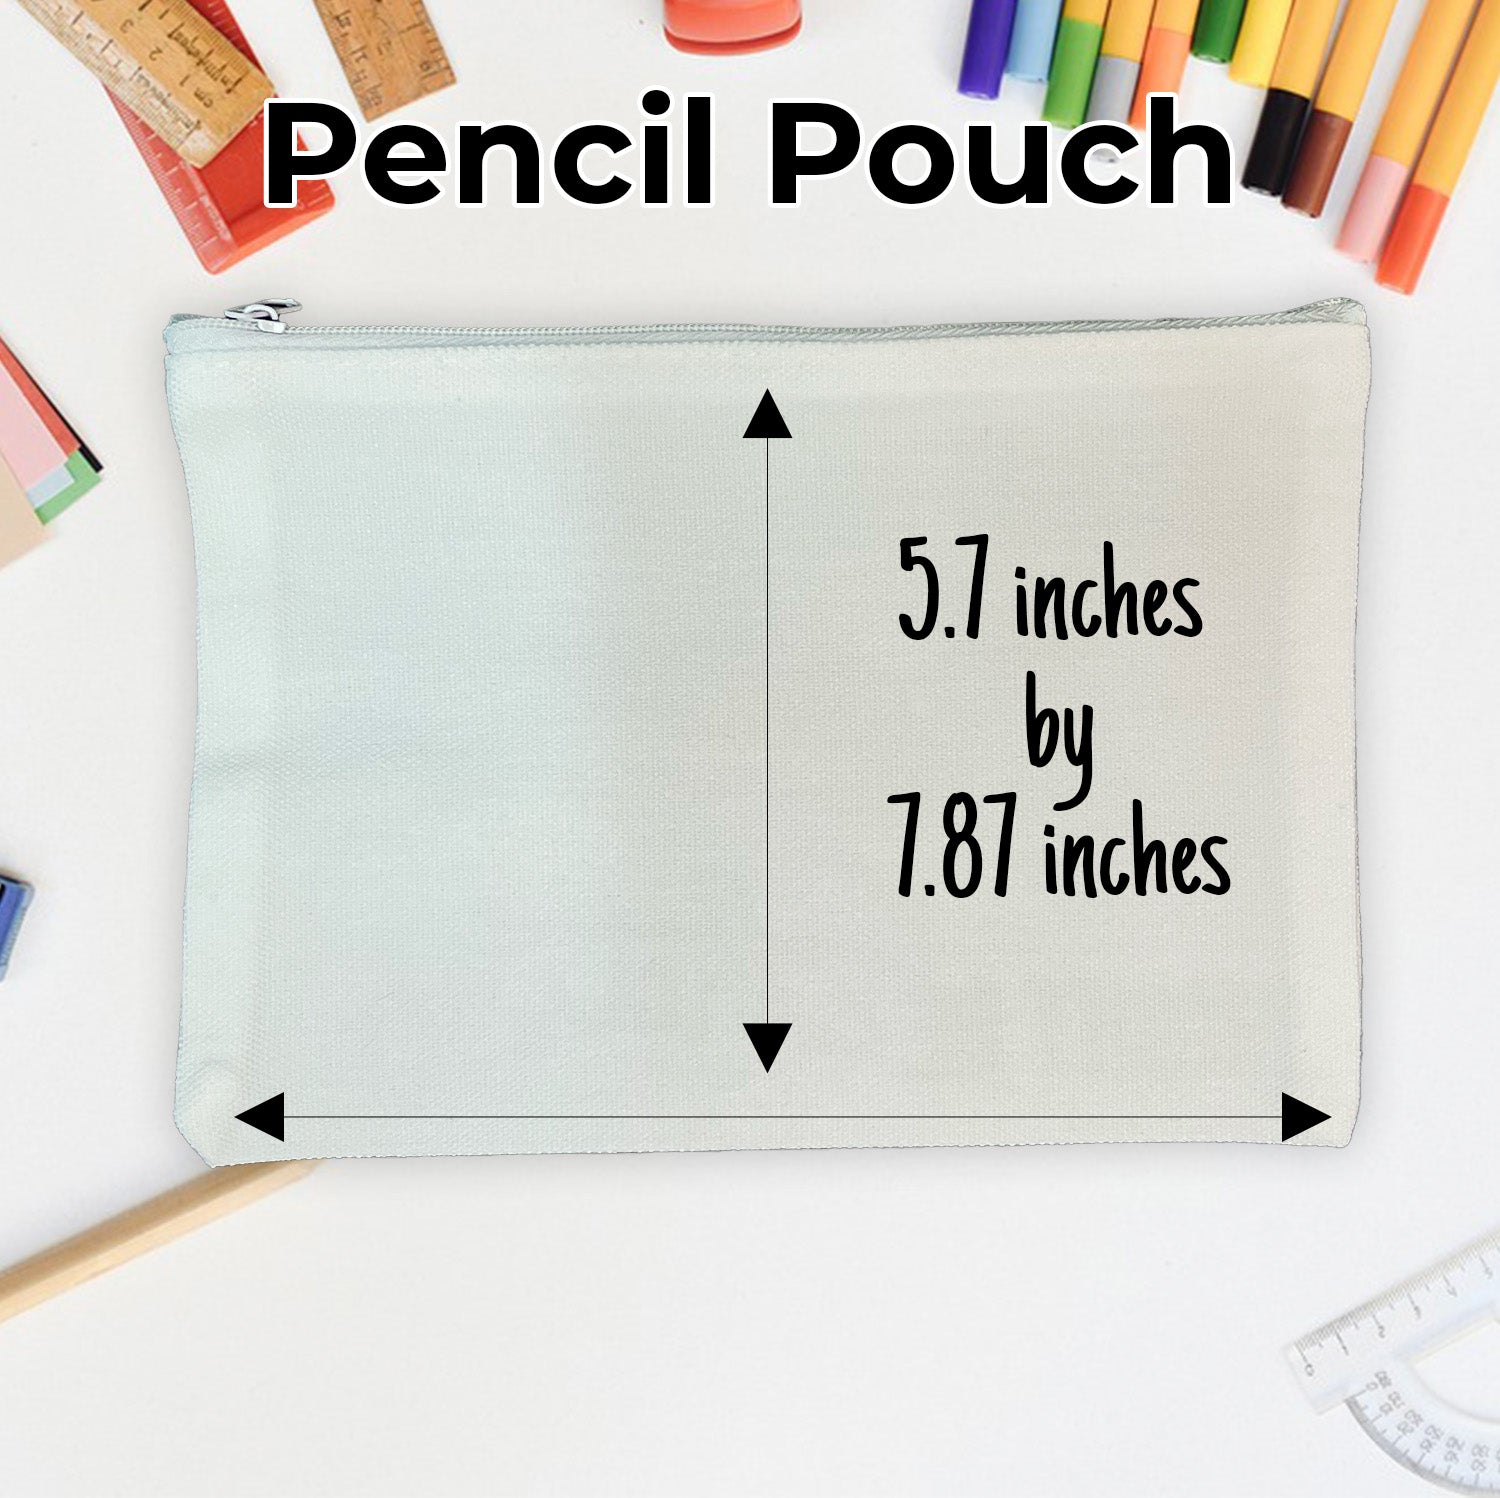 Split Pencil Design - Add Your Name Pencil Pouch for School Supplies